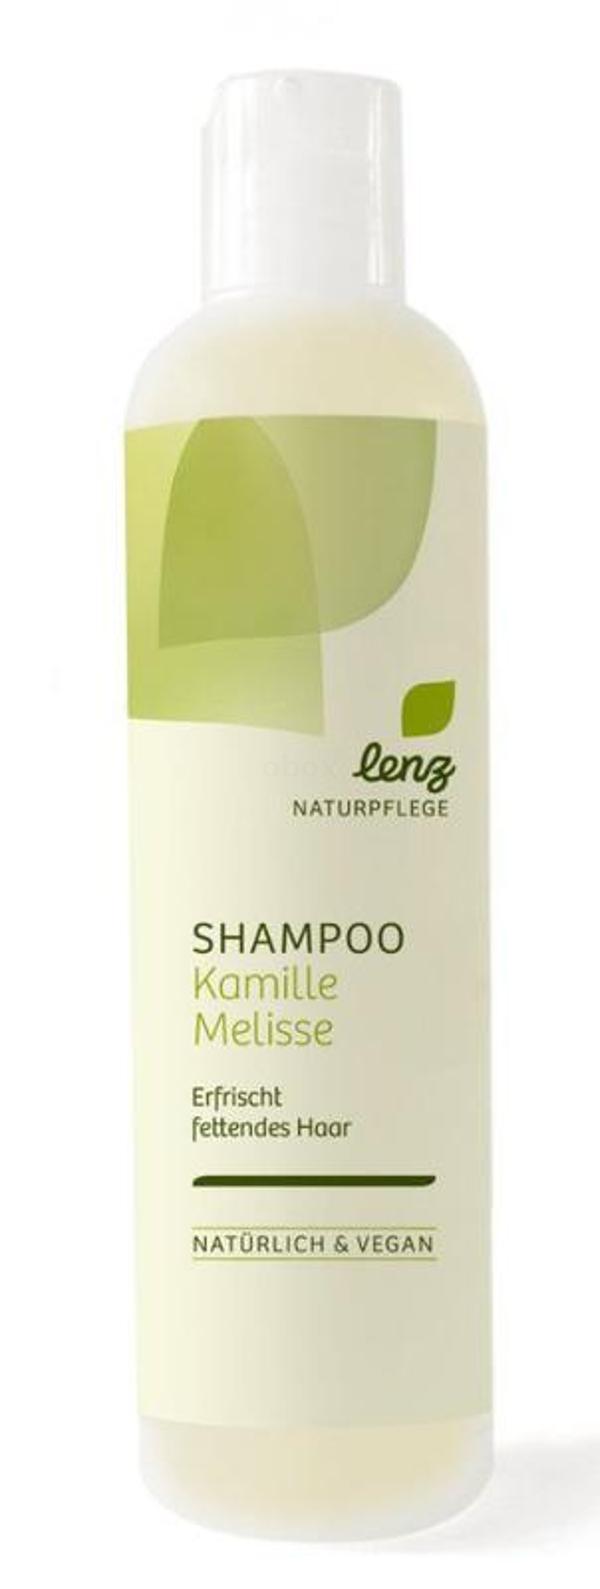 Produktfoto zu Shampoo Kamille Melisse [250ml]